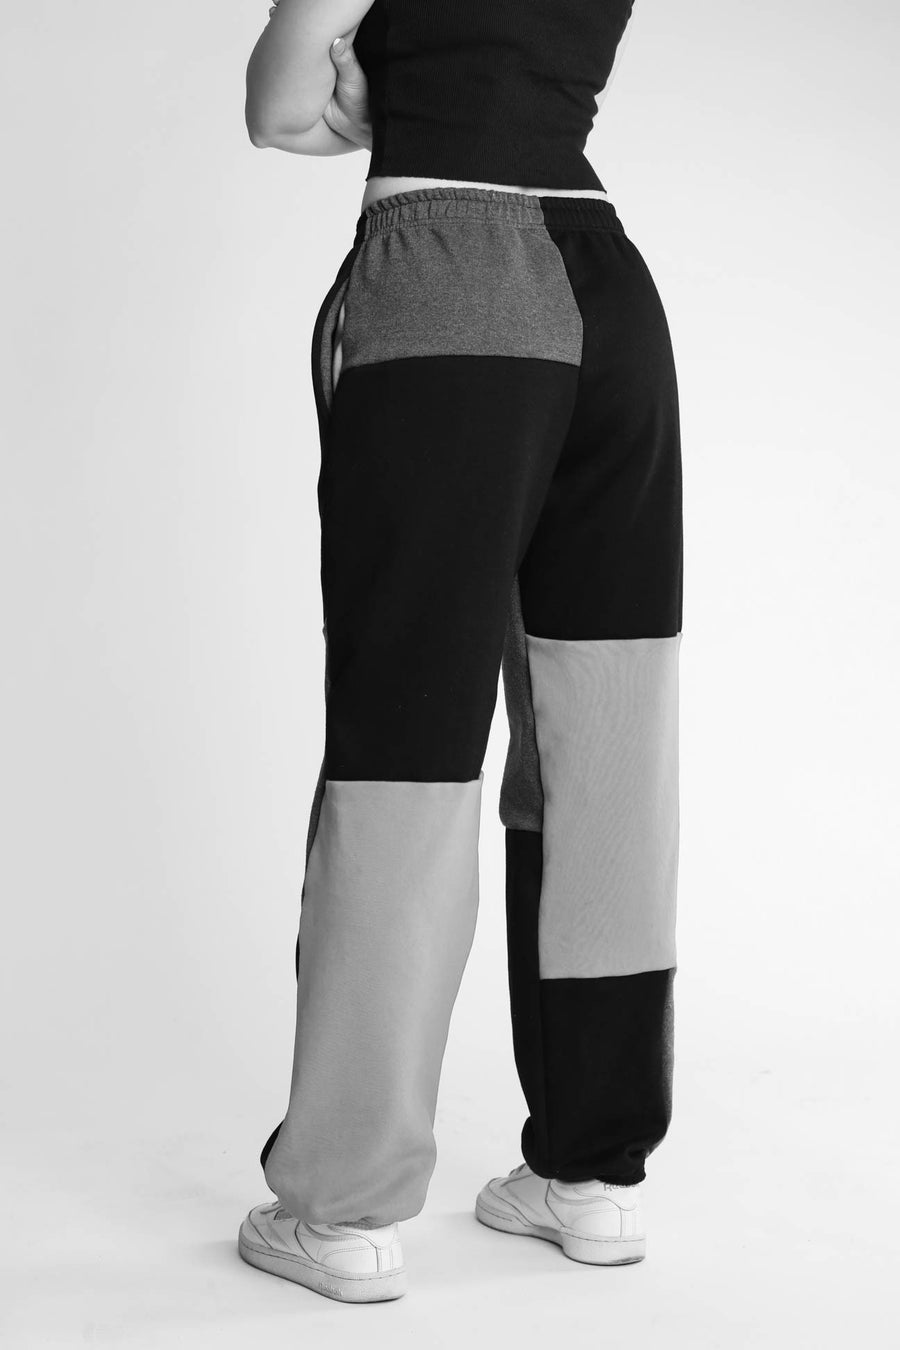 Rework Nike Patchwork Crop Sweatpants - S